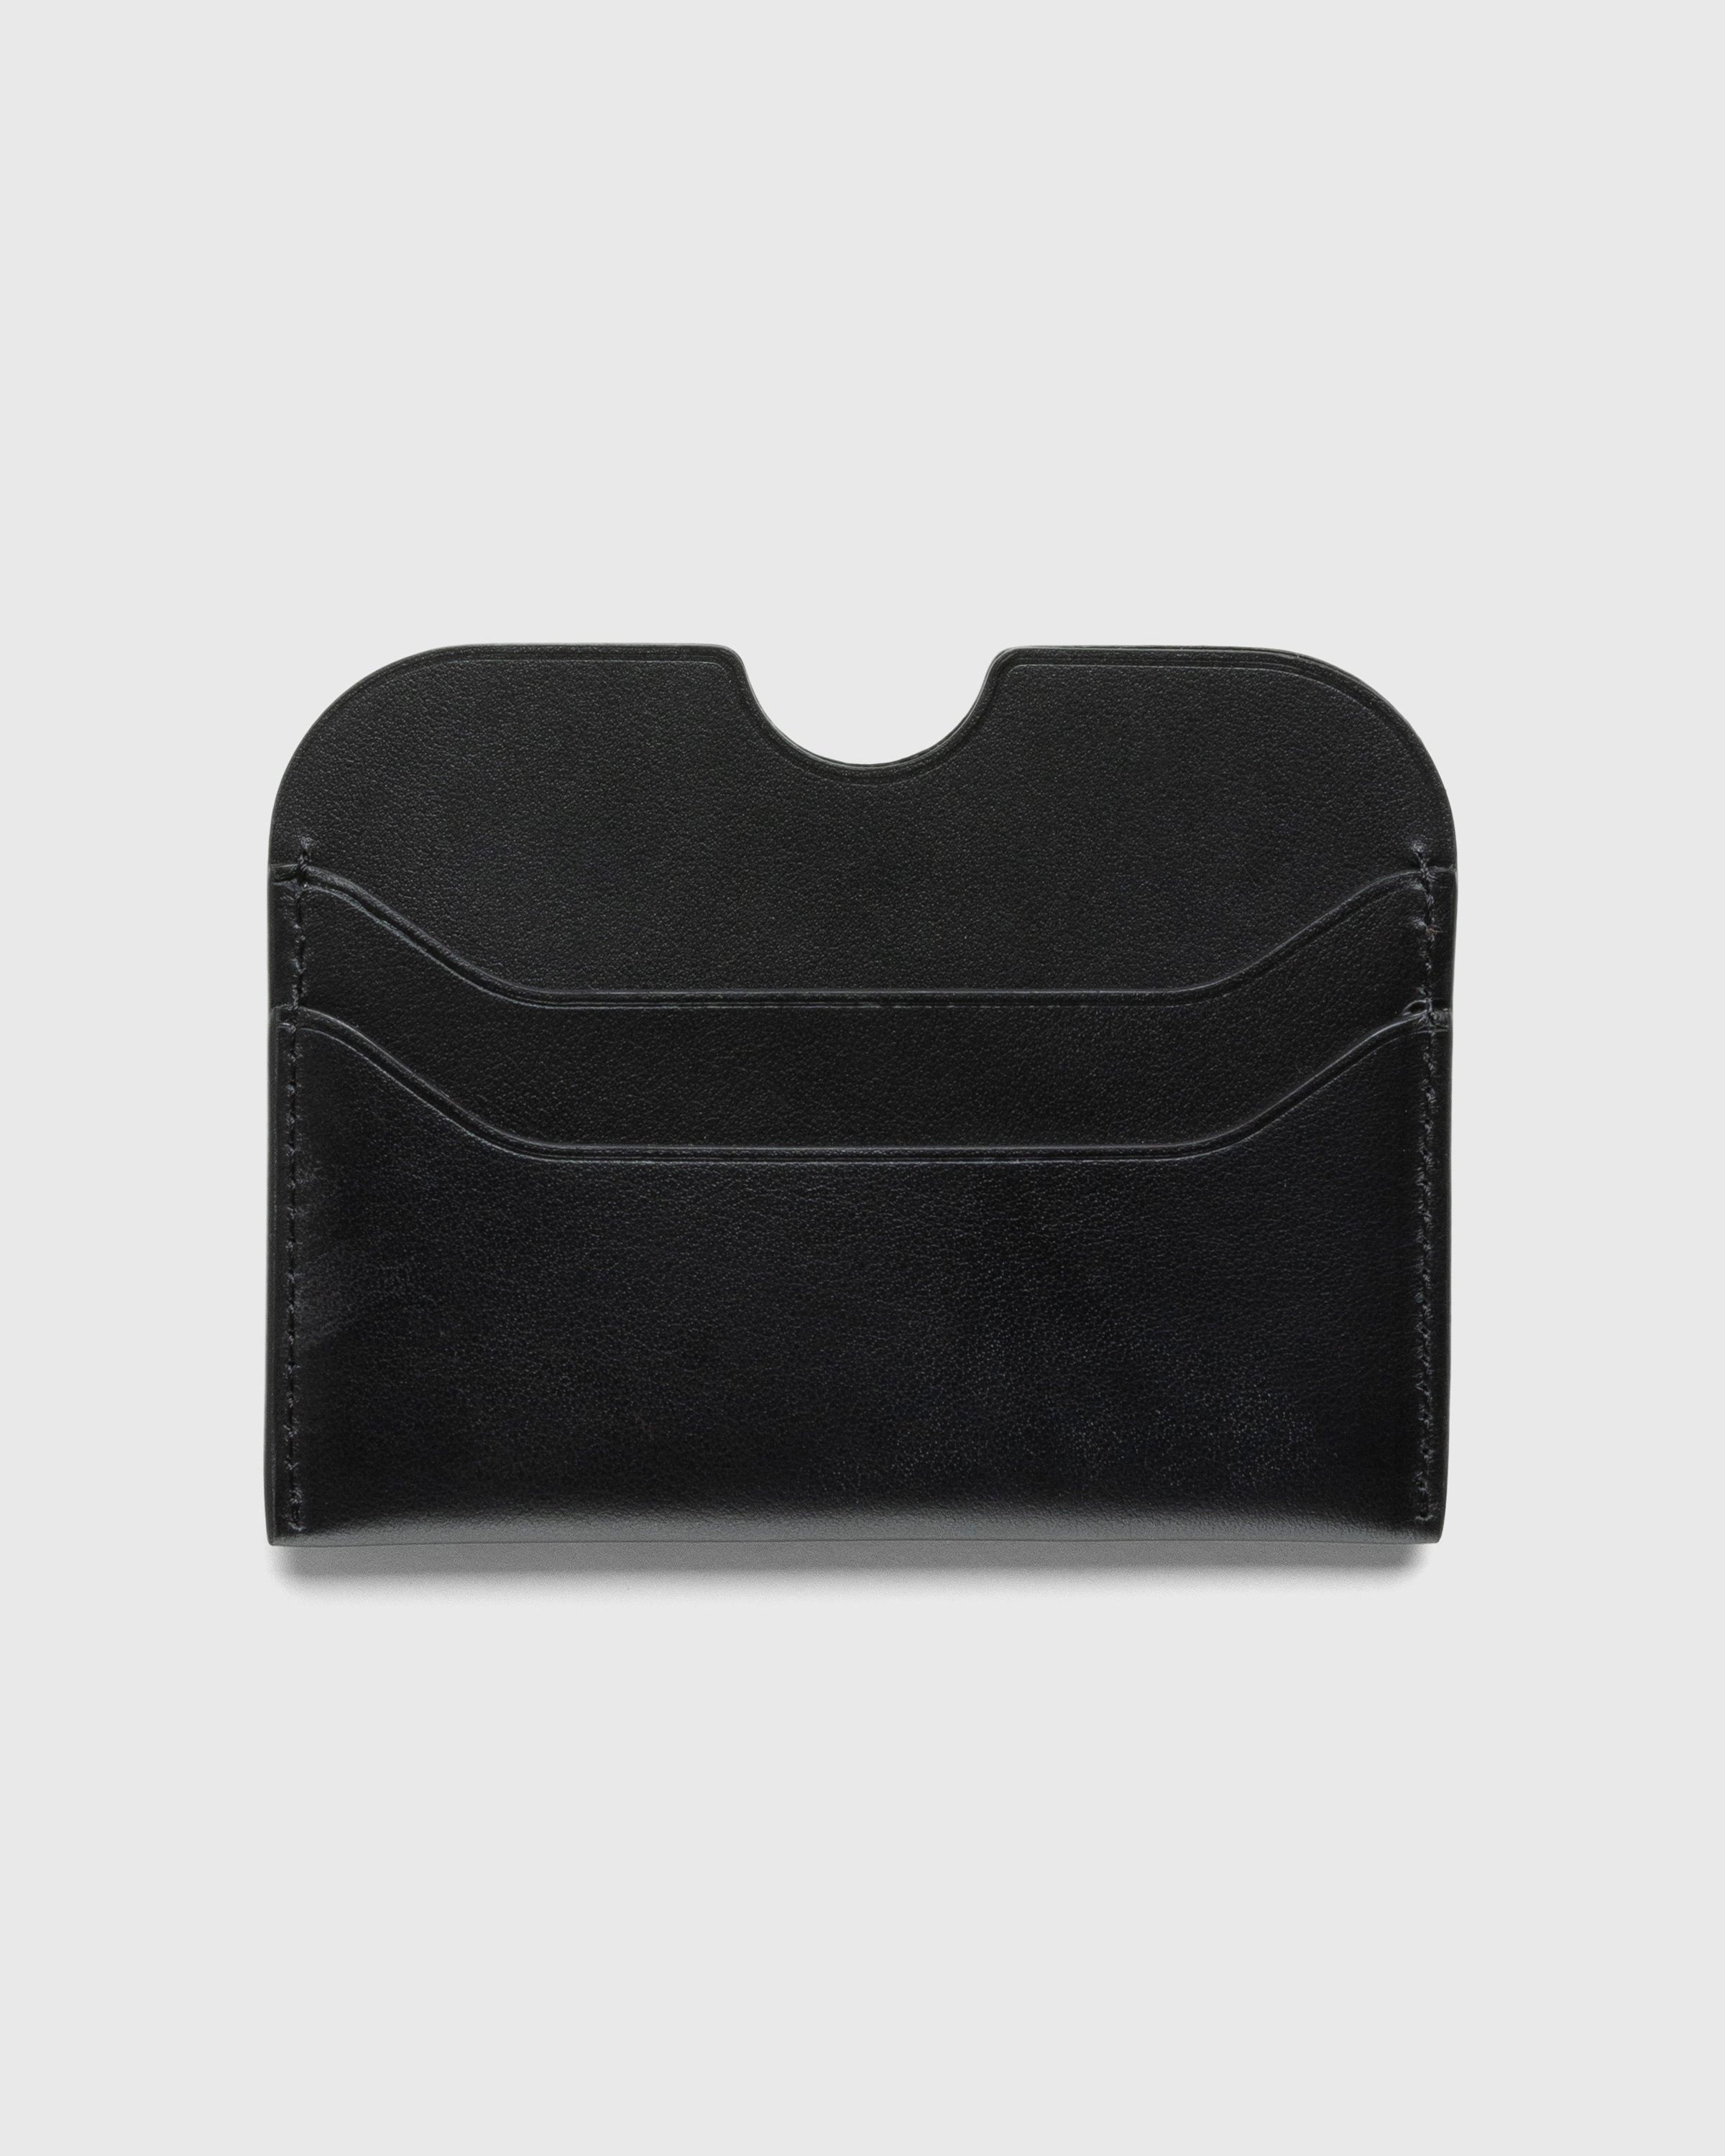 Acne Studios - Leather Card Holder Black - Accessories - Black - Image 2